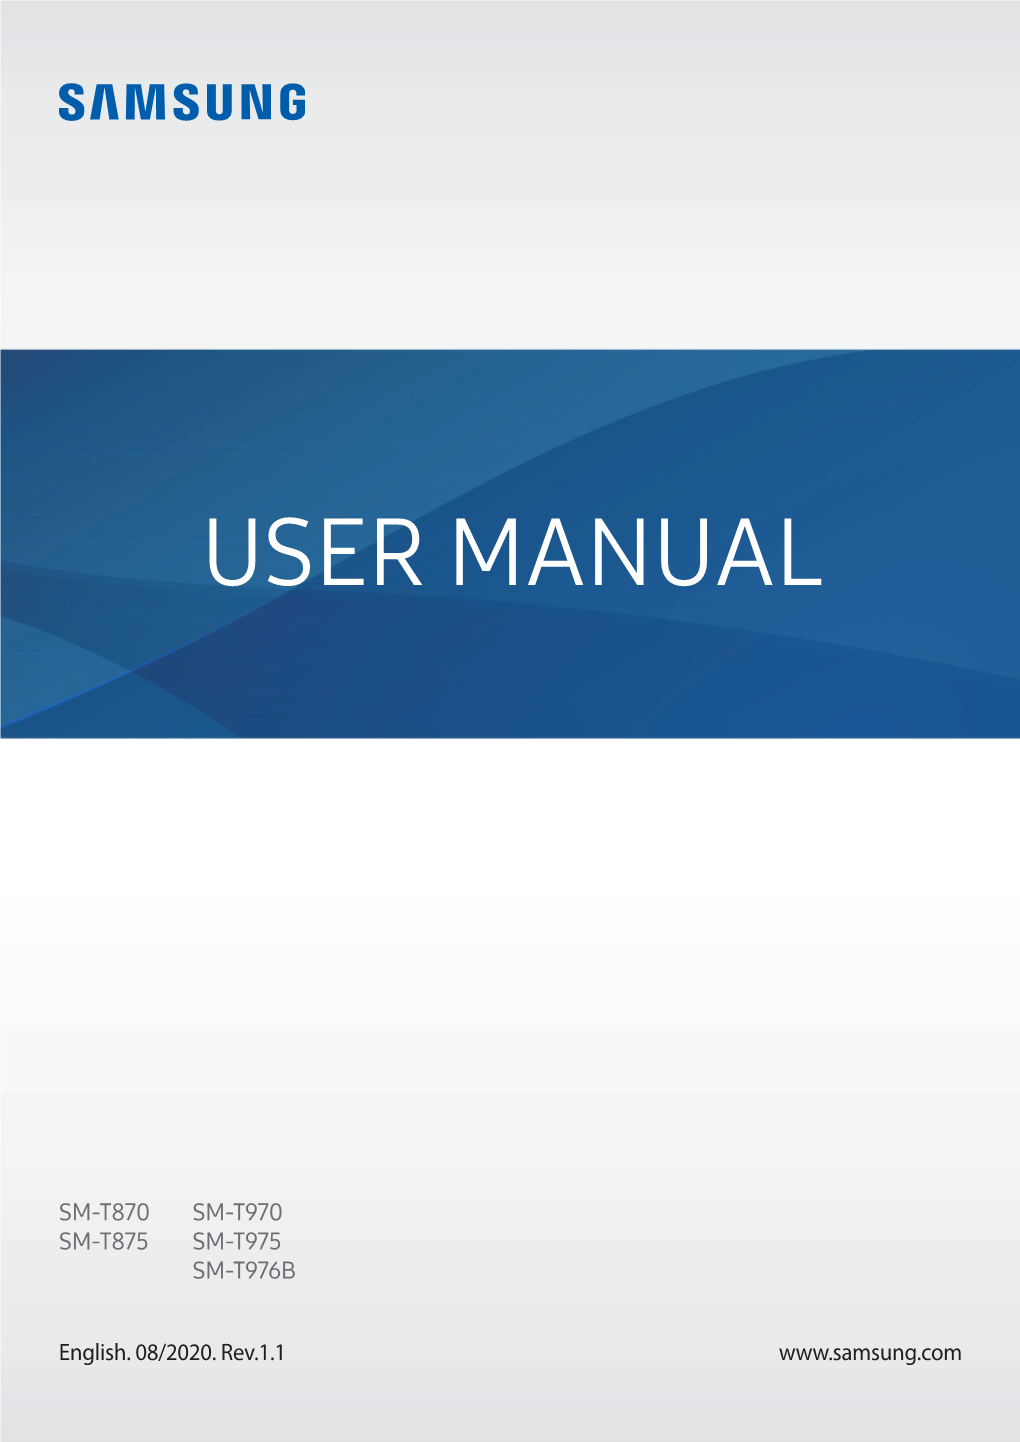 Samsung Galaxy Tab S7 User Manual [SM-T870, SM-T875, SM-T970, SM-T975, SM-T976B]